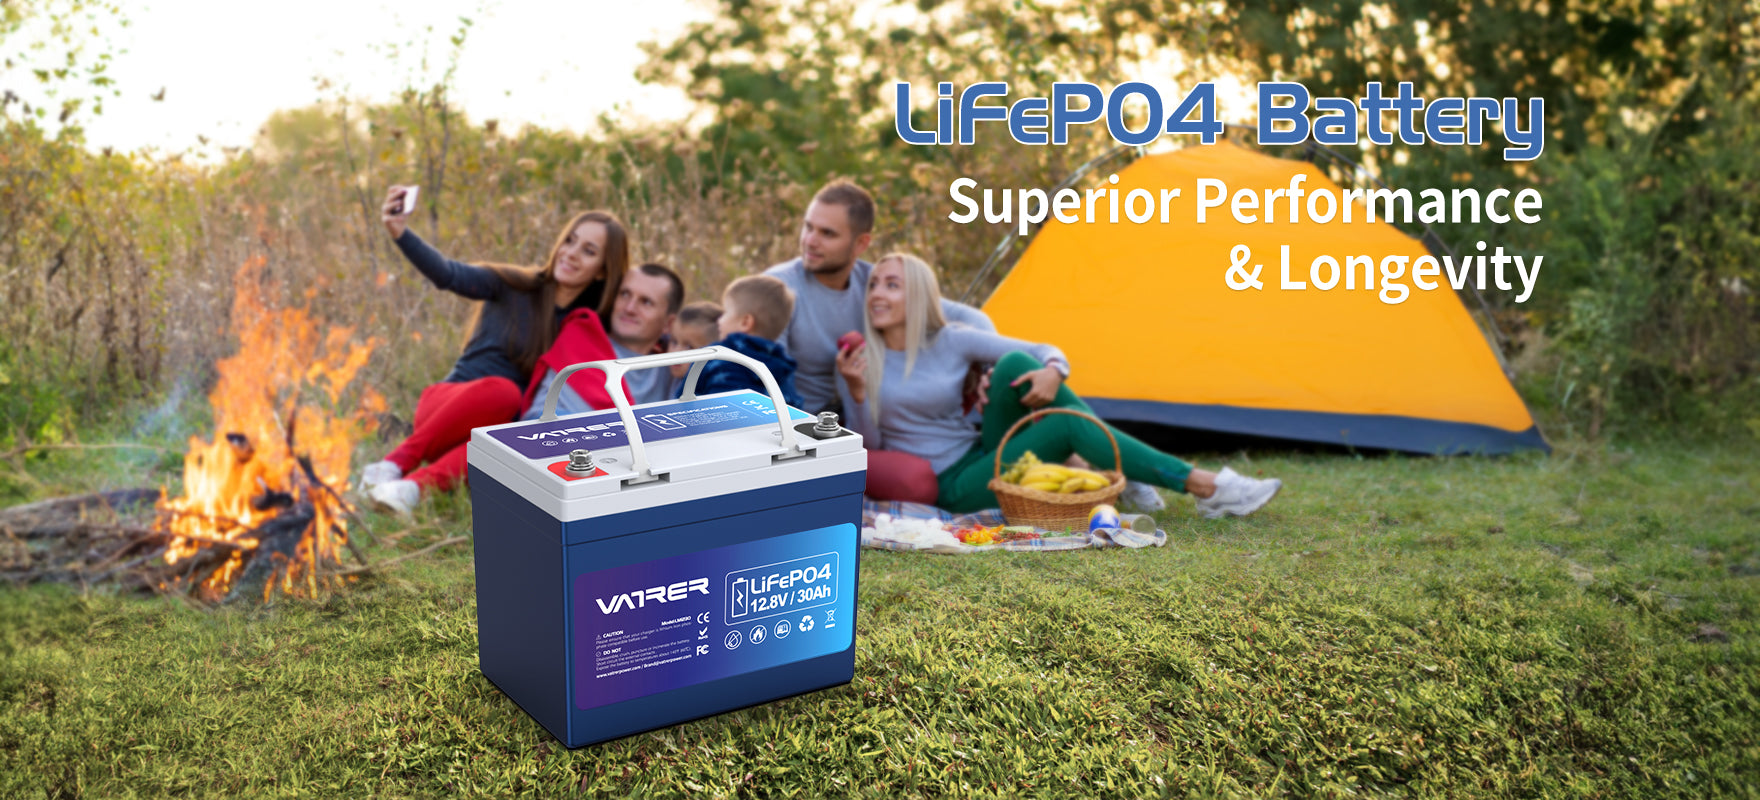 LiFePO4 Batery Superior Performance & Longevity